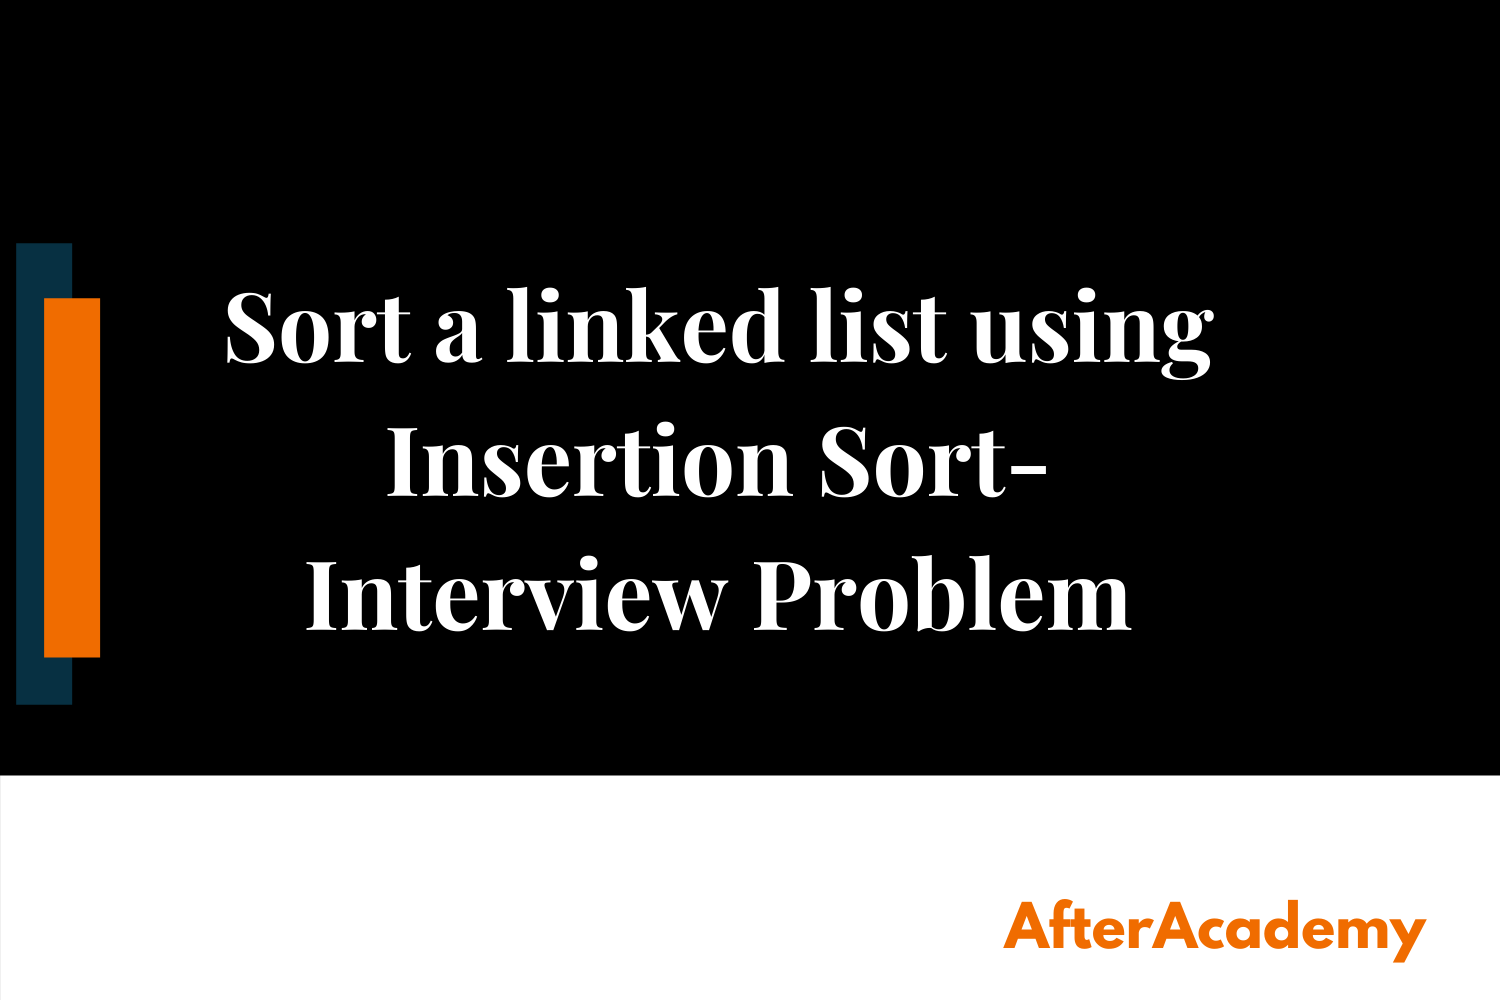 Sort a linked list using Insertion Sort - Interview Problem